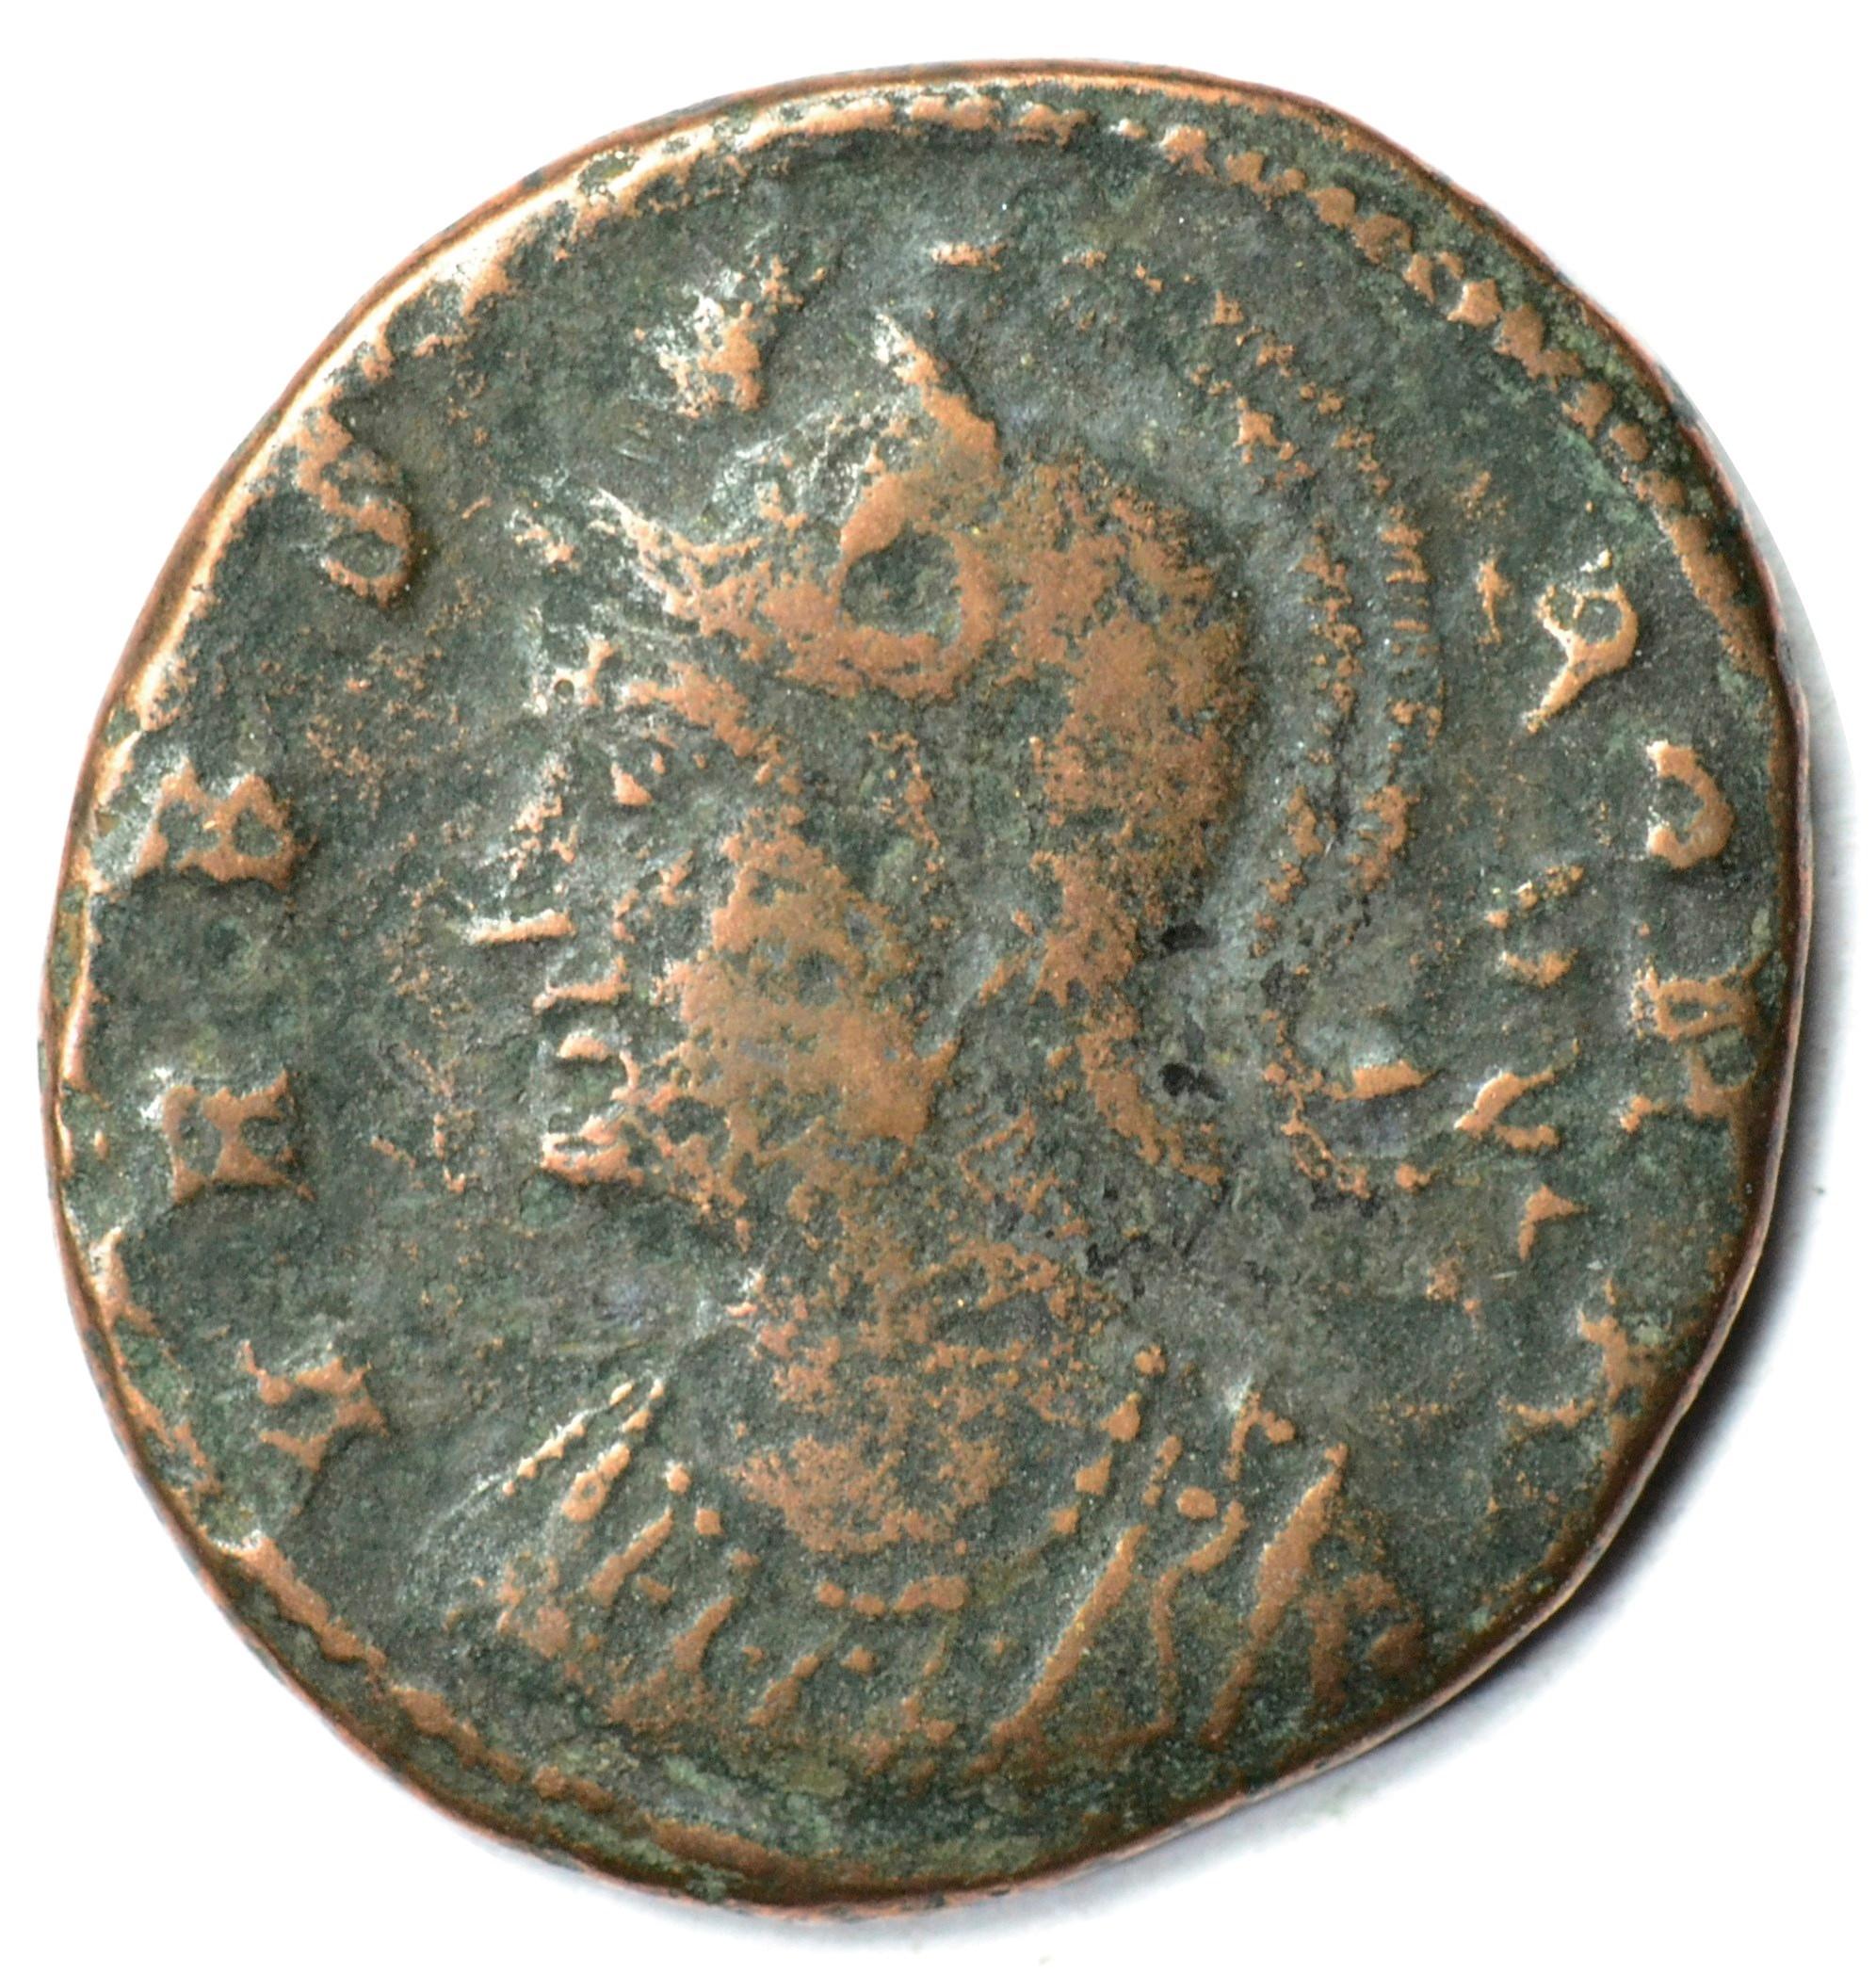 ANCIENT ROME - BRONZE URBS ROMA COIN - ROMULUS & REMUS - 330-346 AD